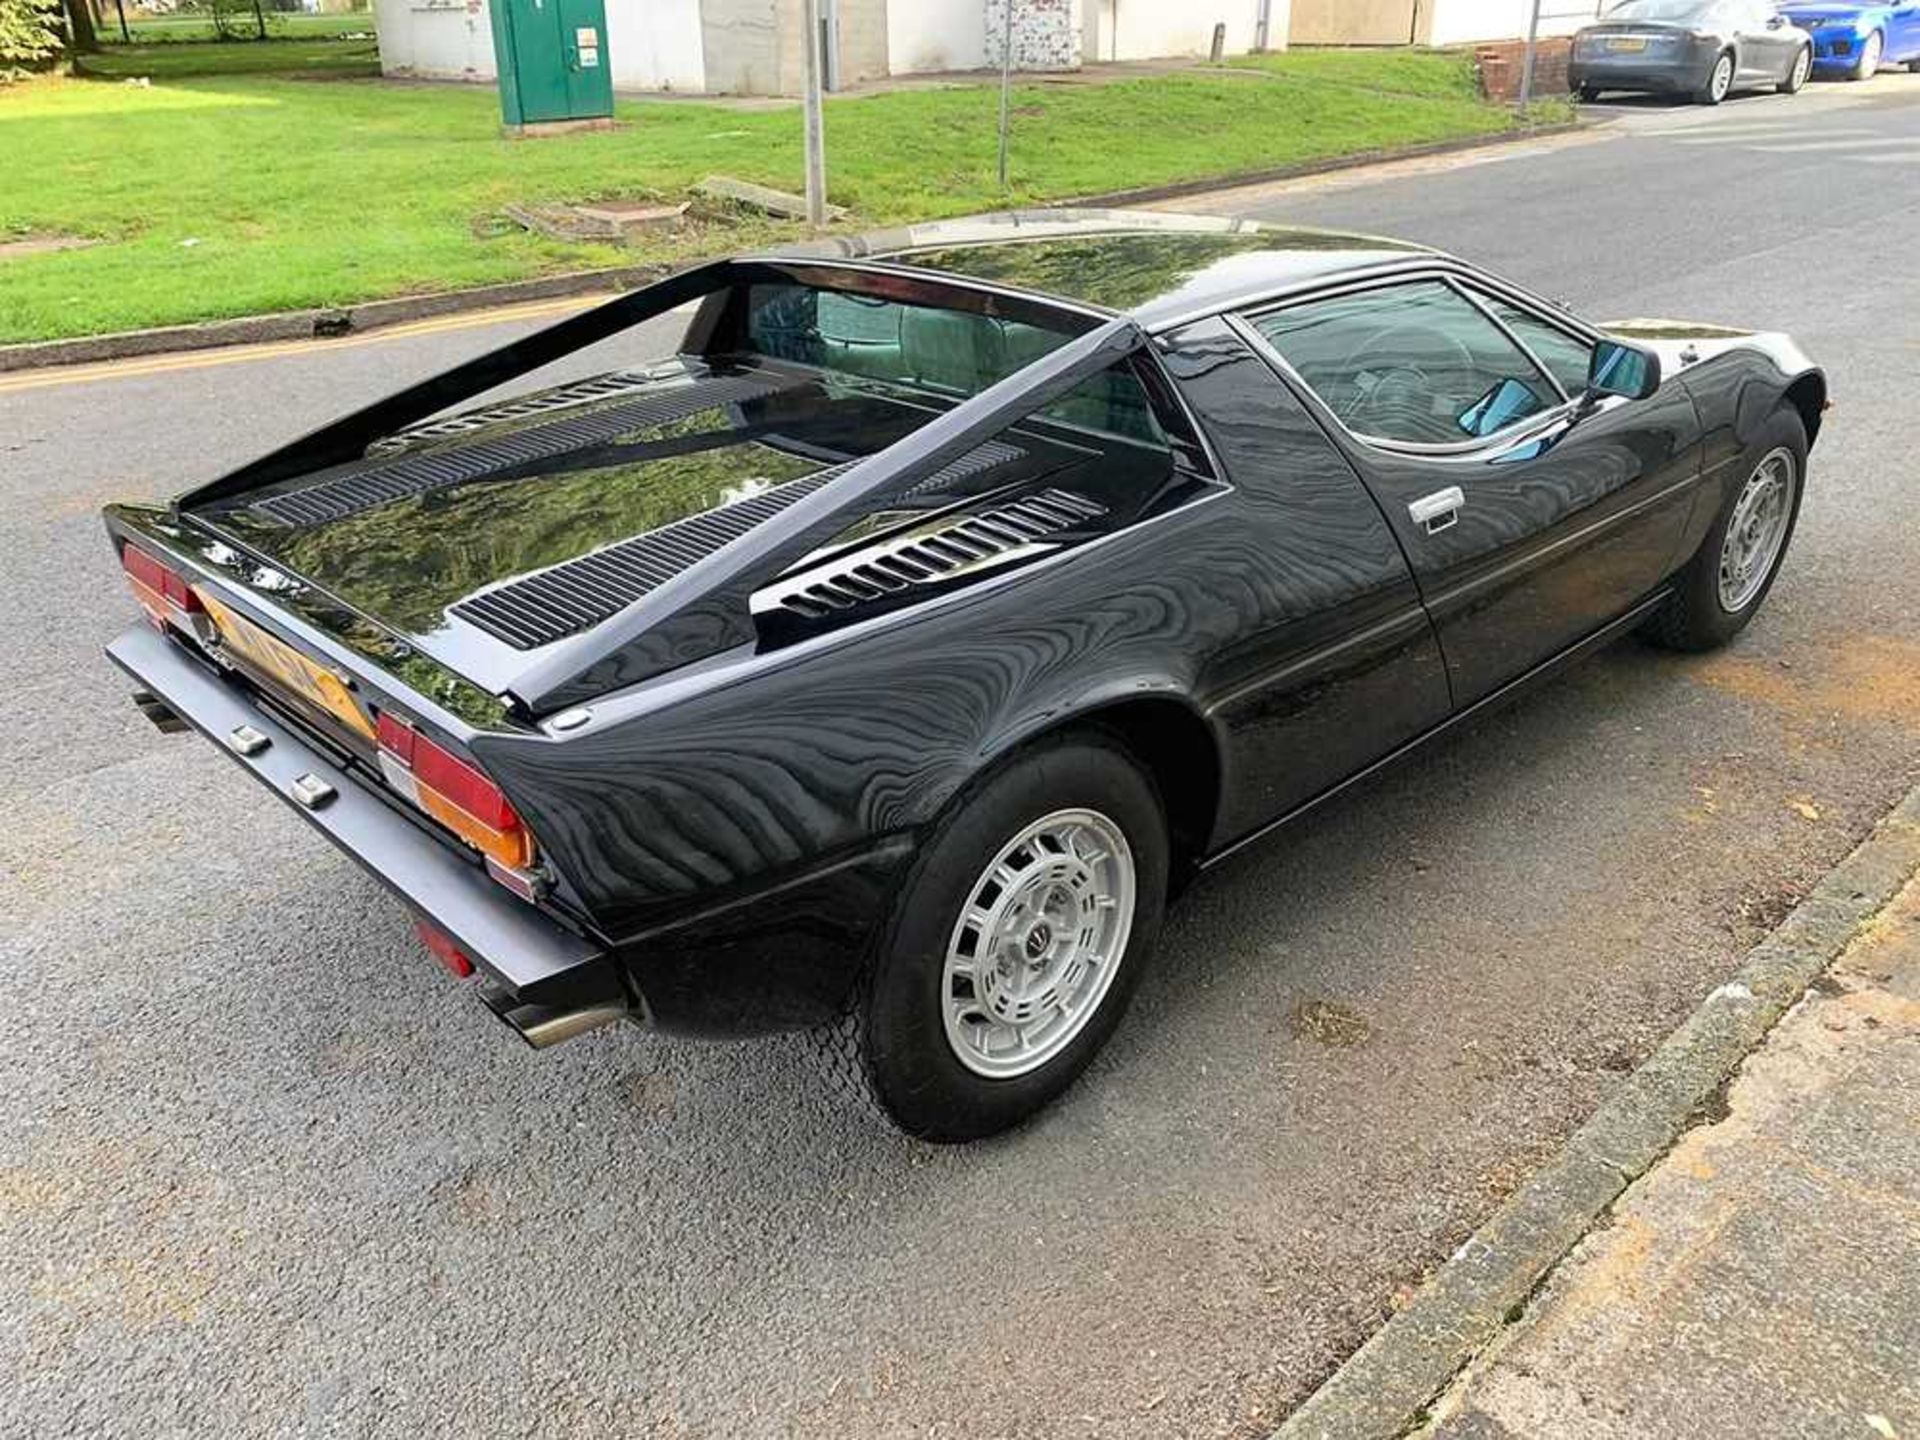 1982 Maserati Merak SS 1 of just 140 UK-supplied examples - Image 7 of 15